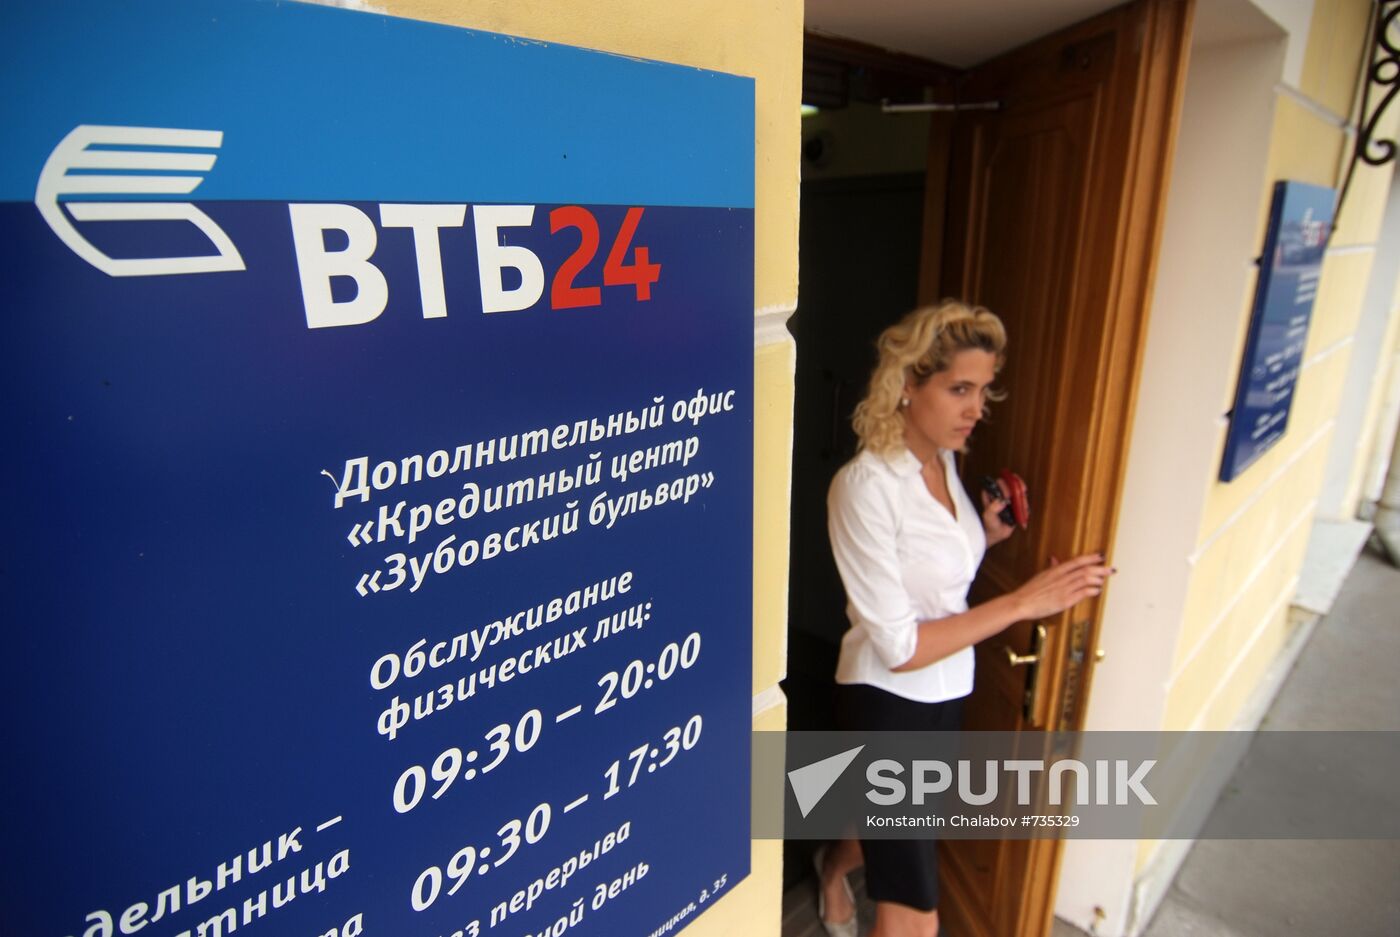 VTB24 bank signboard